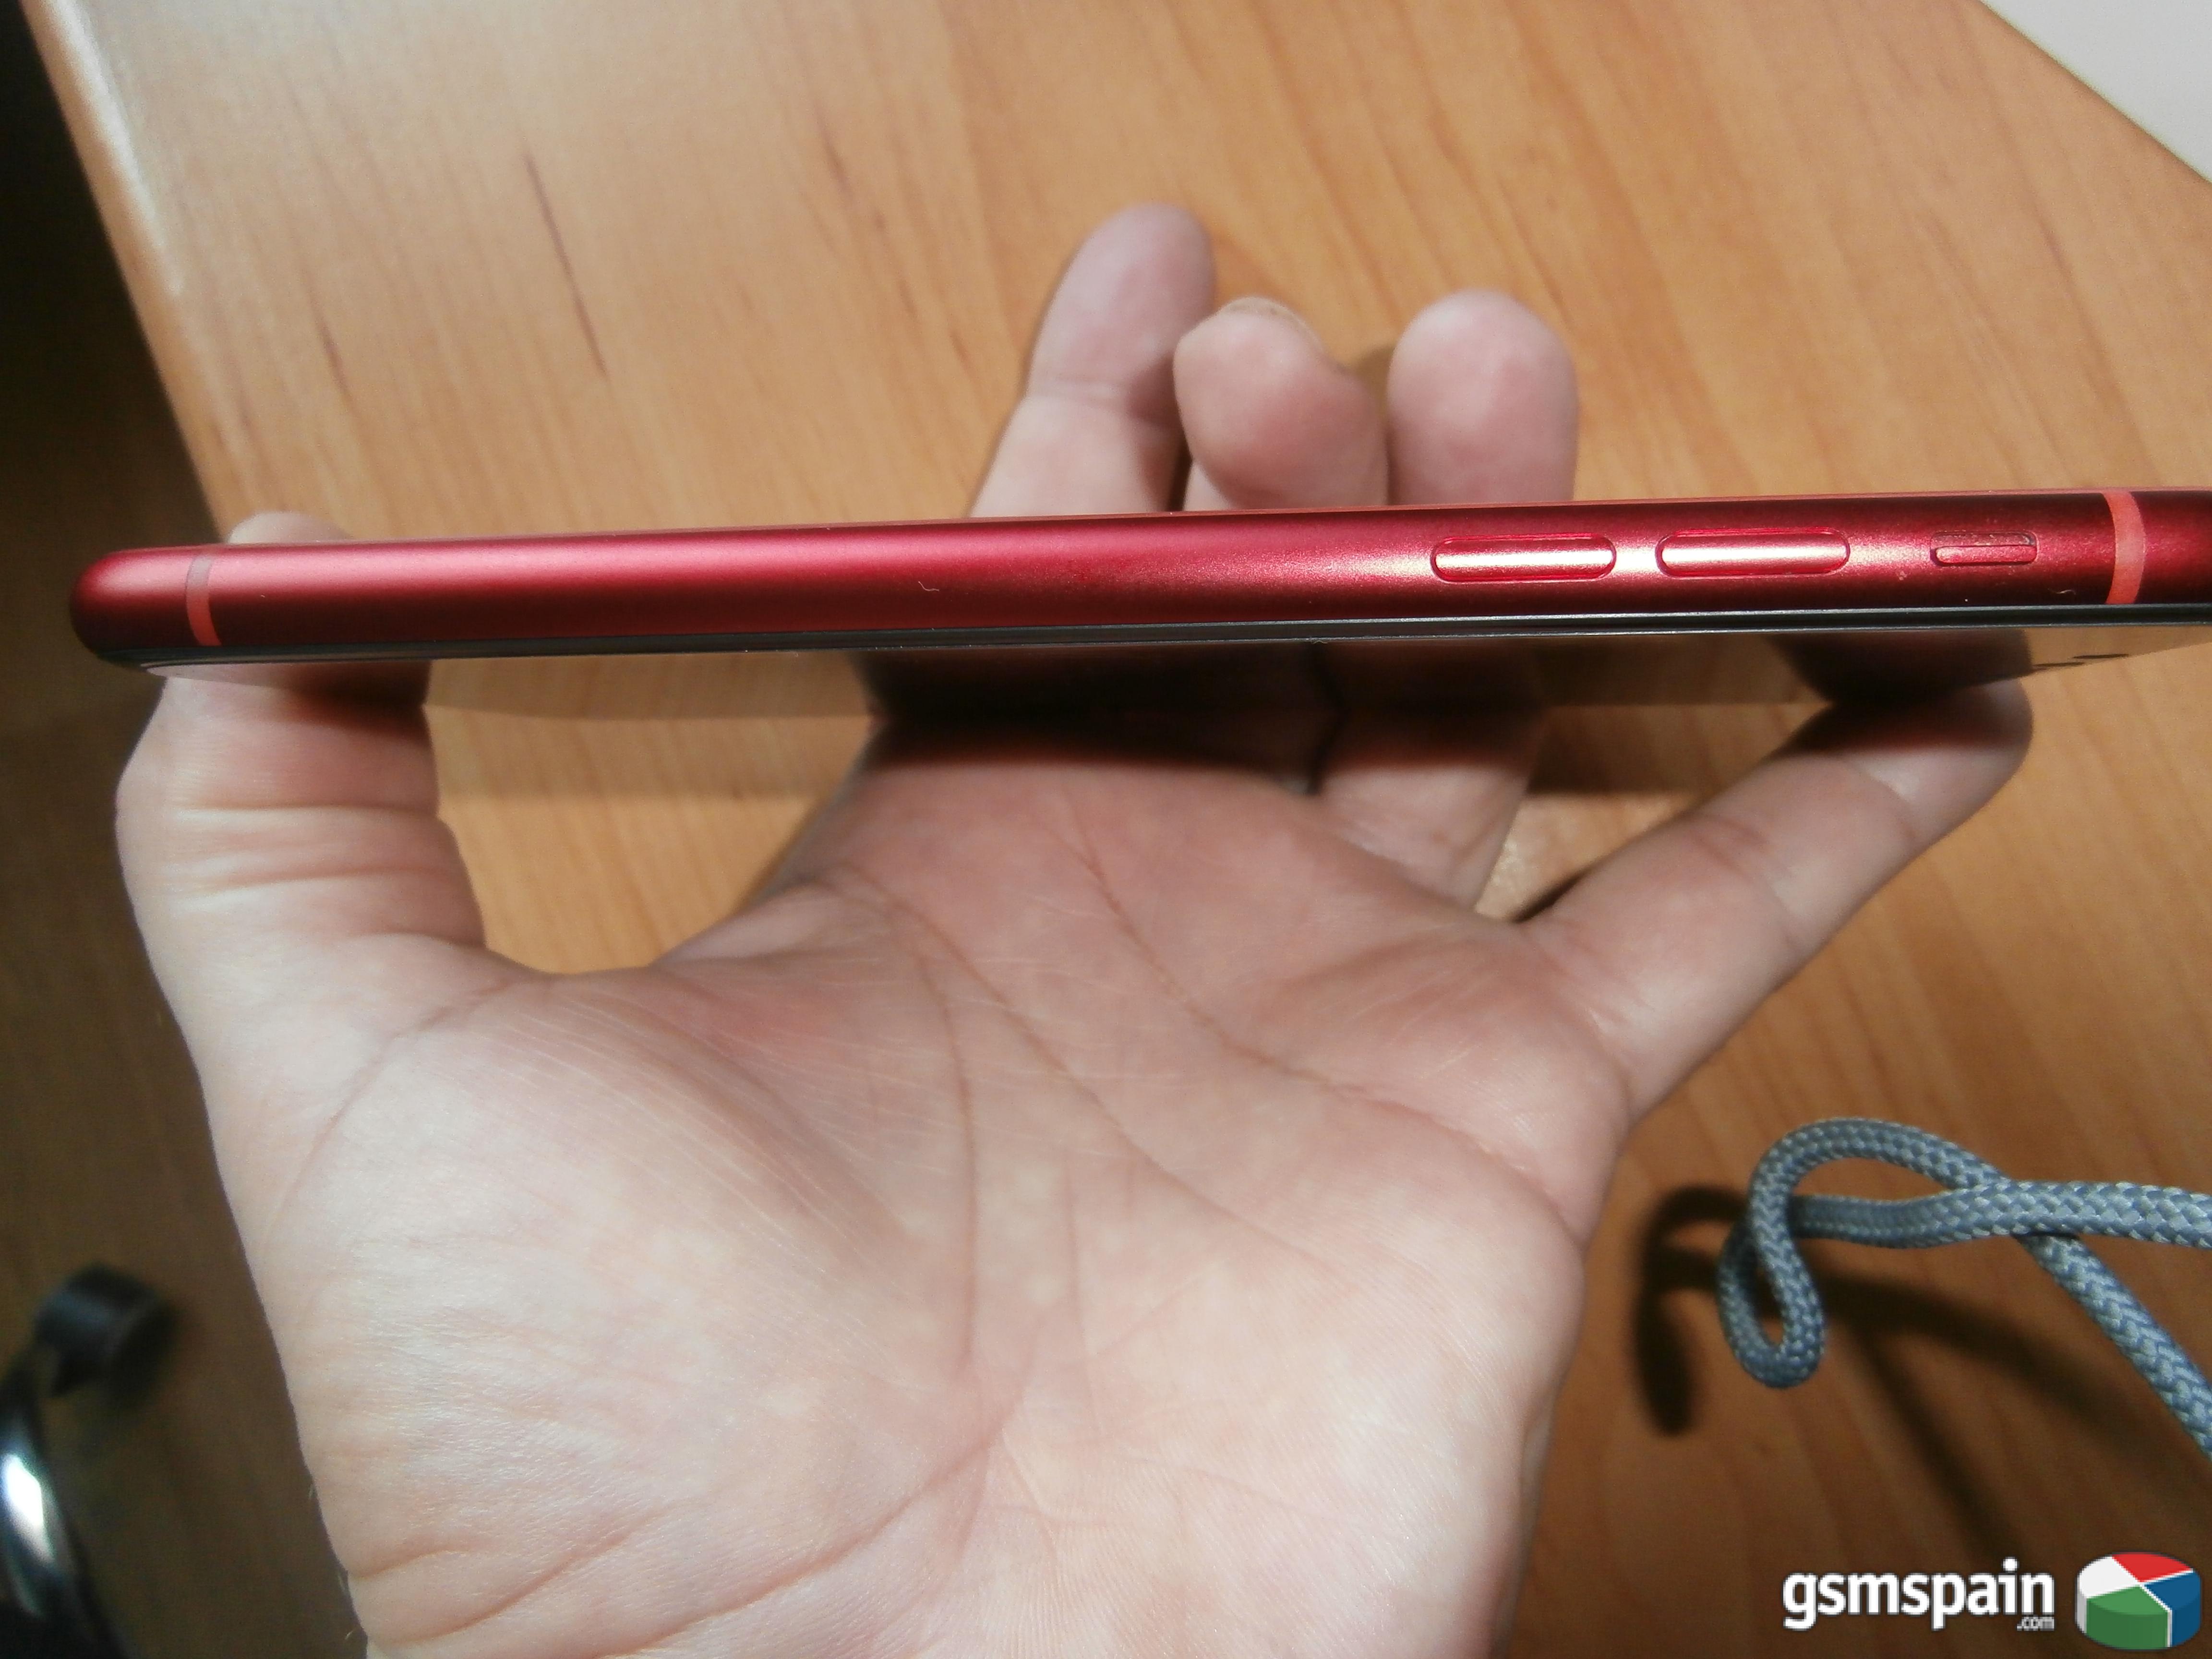 [VENDO] Iphone XR 64Gb Red